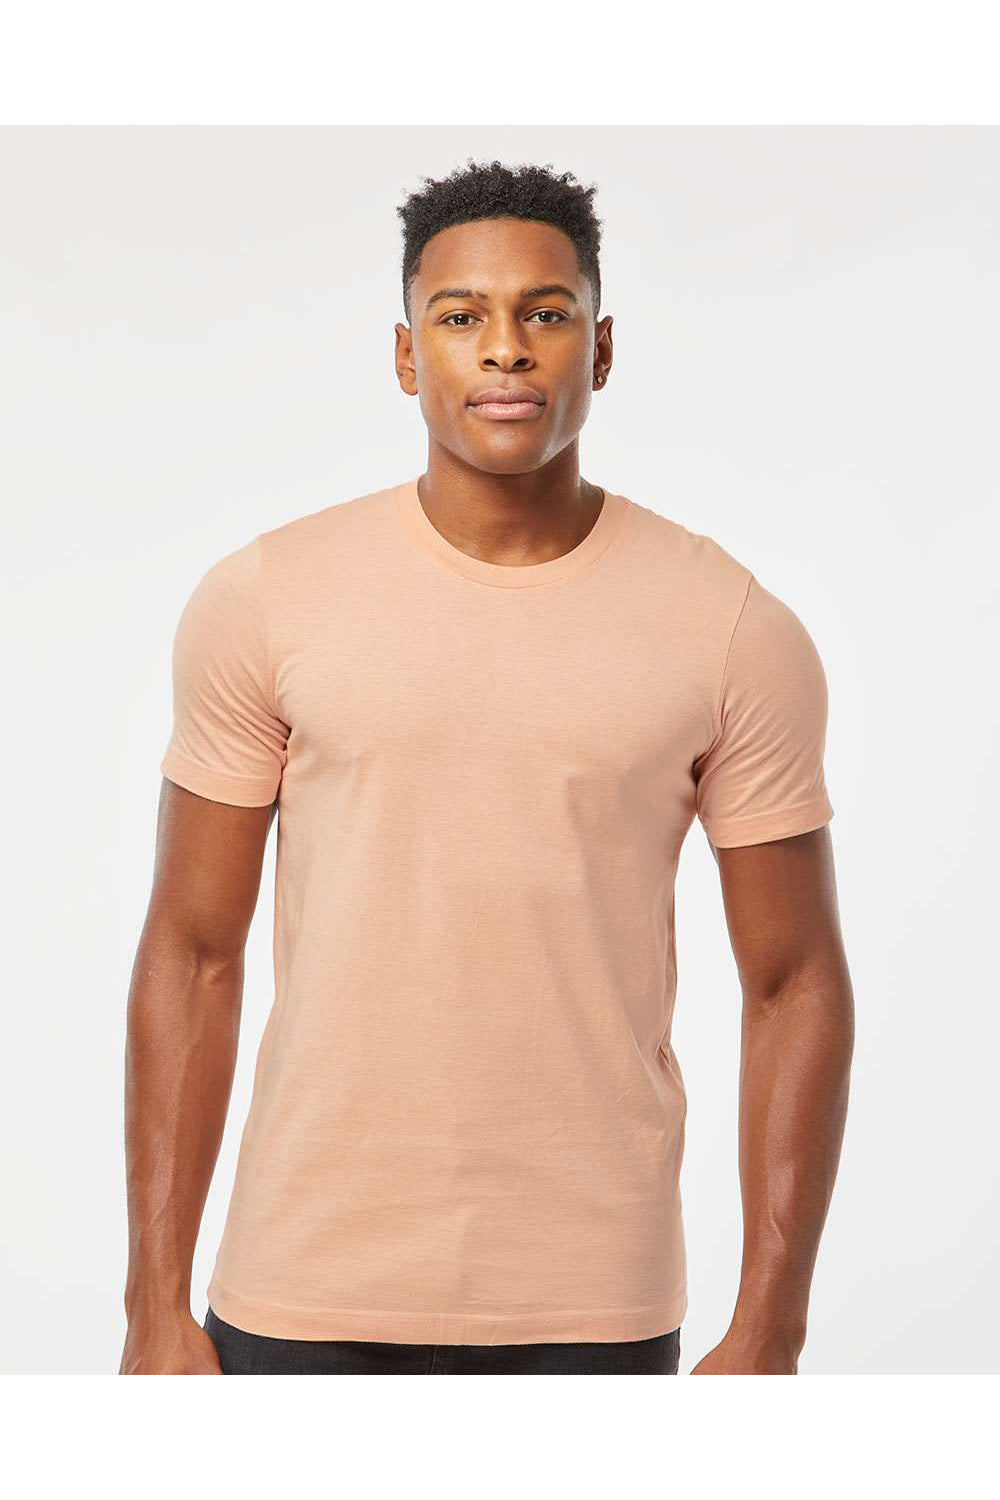 Tultex 502 Mens Premium Short Sleeve Crewneck T-Shirt Peach Model Front